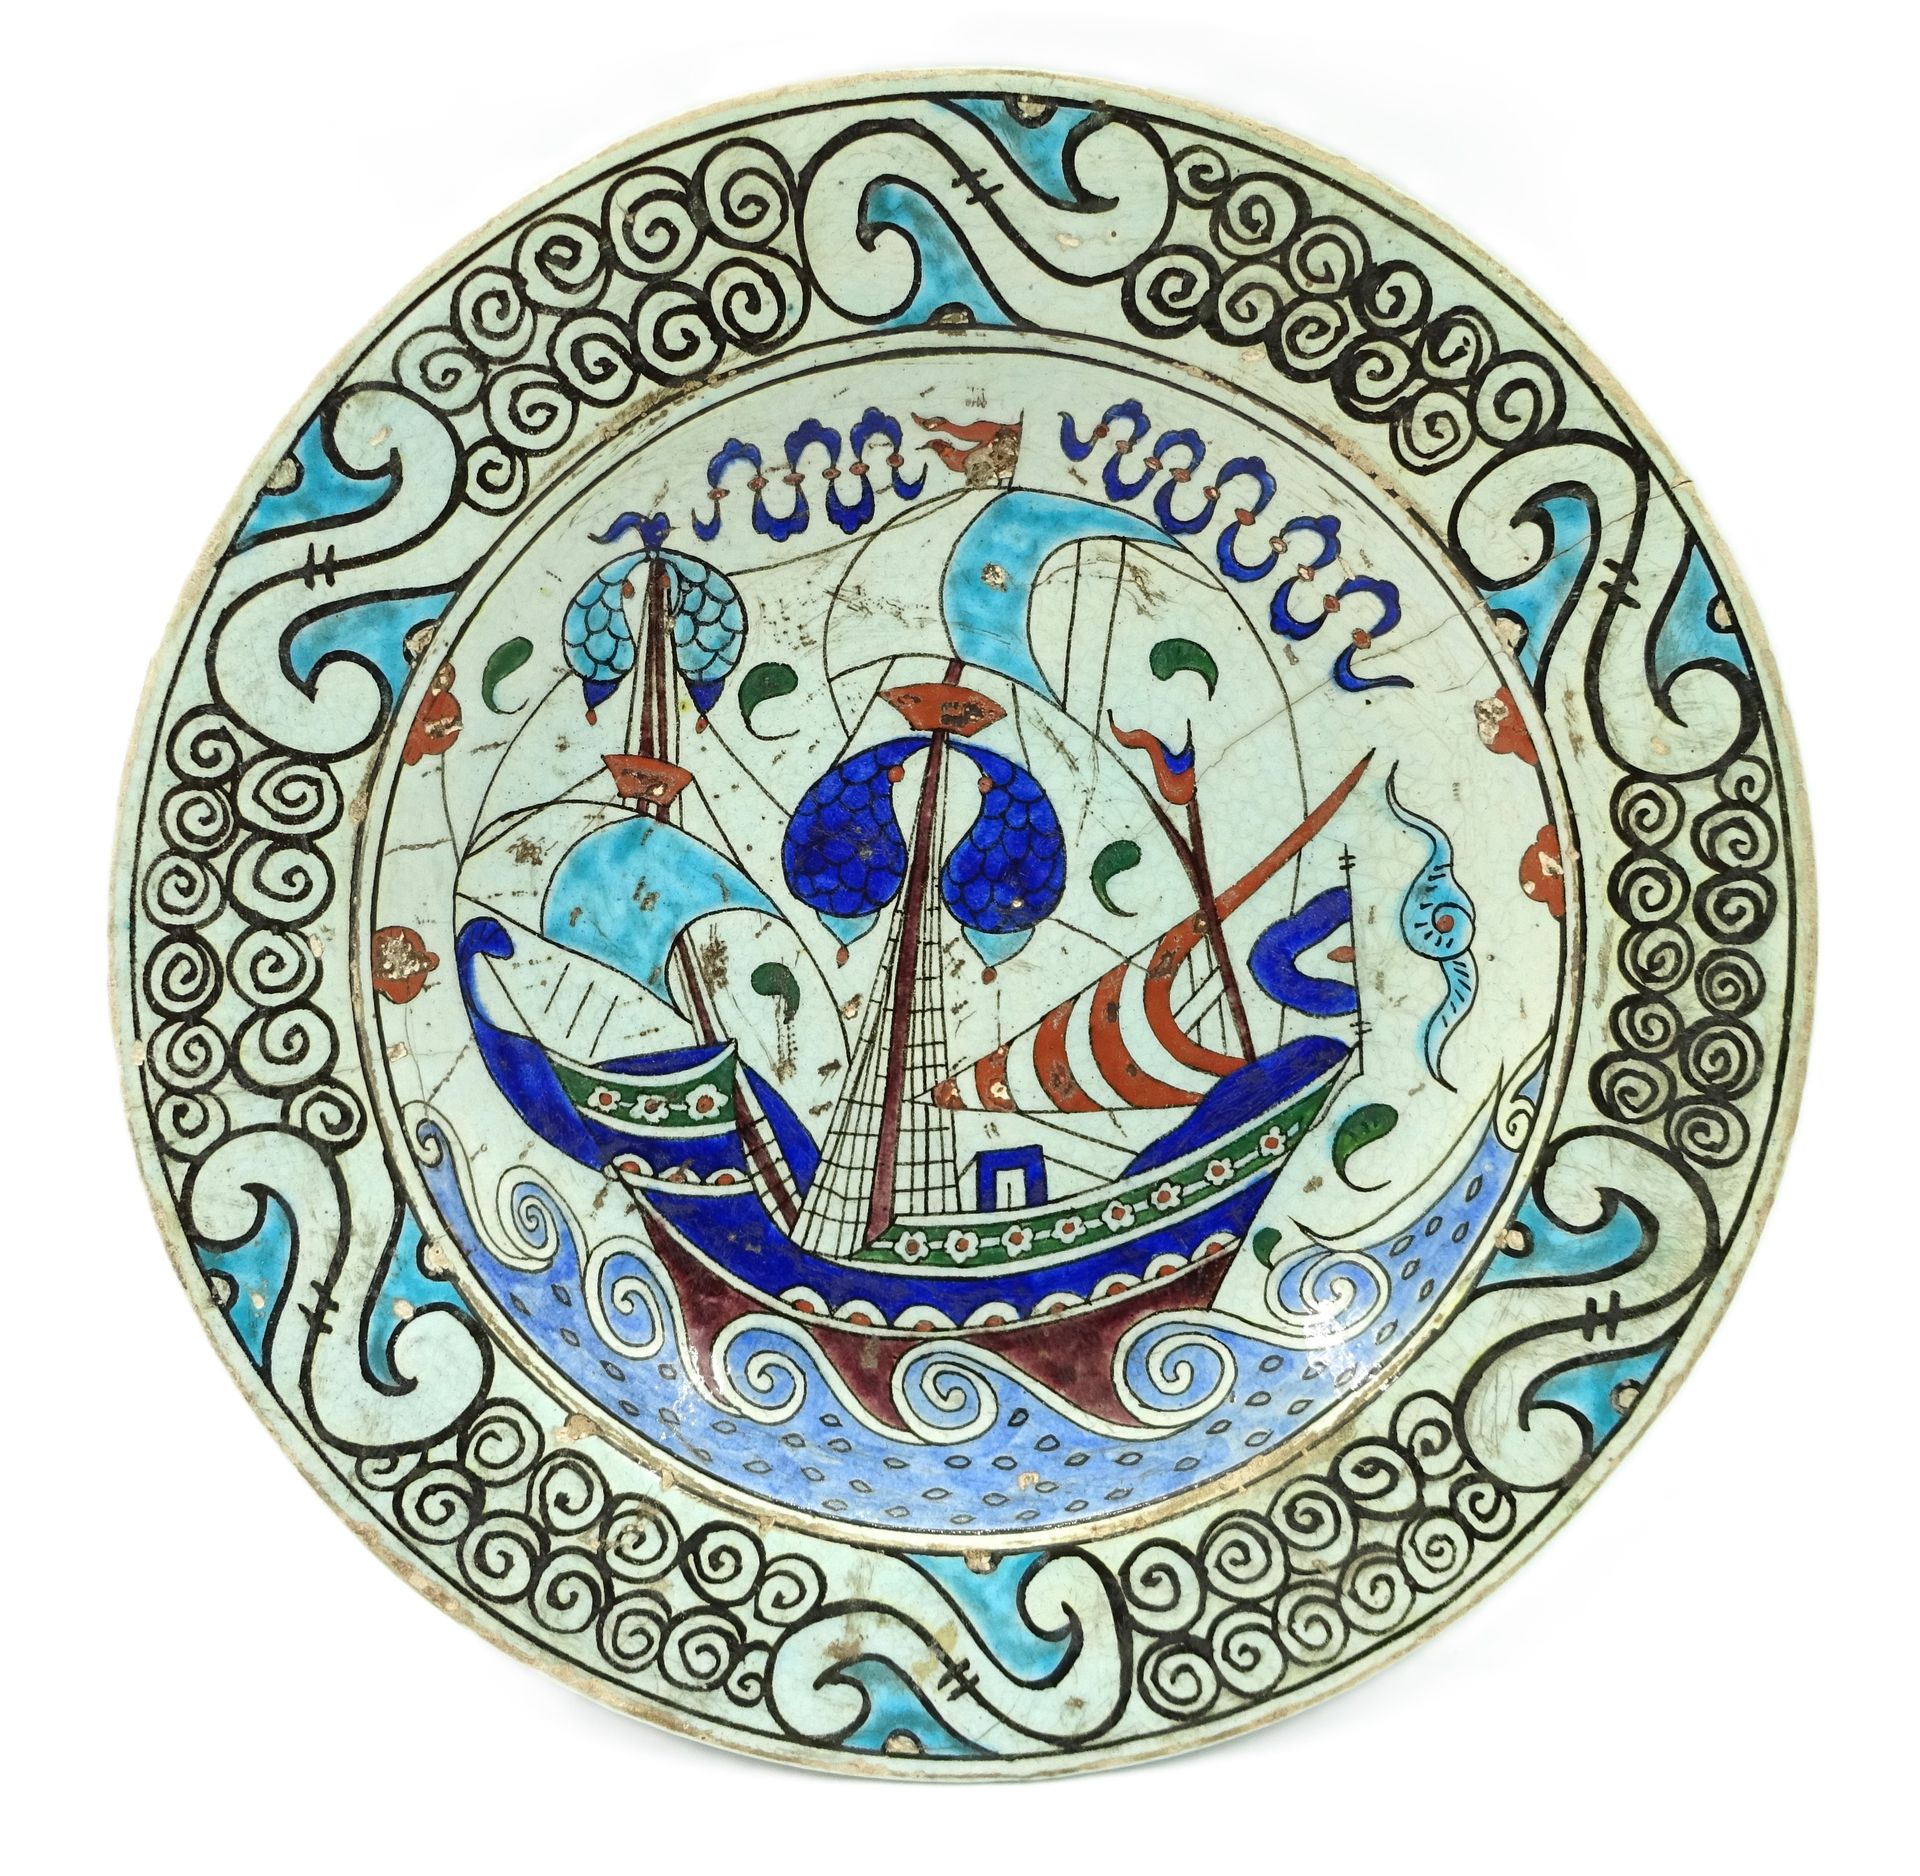 Null 带有船只装饰的塔巴克盘，土耳其，可能在库塔希亚，19 世纪
硅质陶瓷盘在透明釉下的白底上绘有多色彩绘装饰，图案是一艘在波浪中航行的三桅船，周围是漂浮在&hellip;